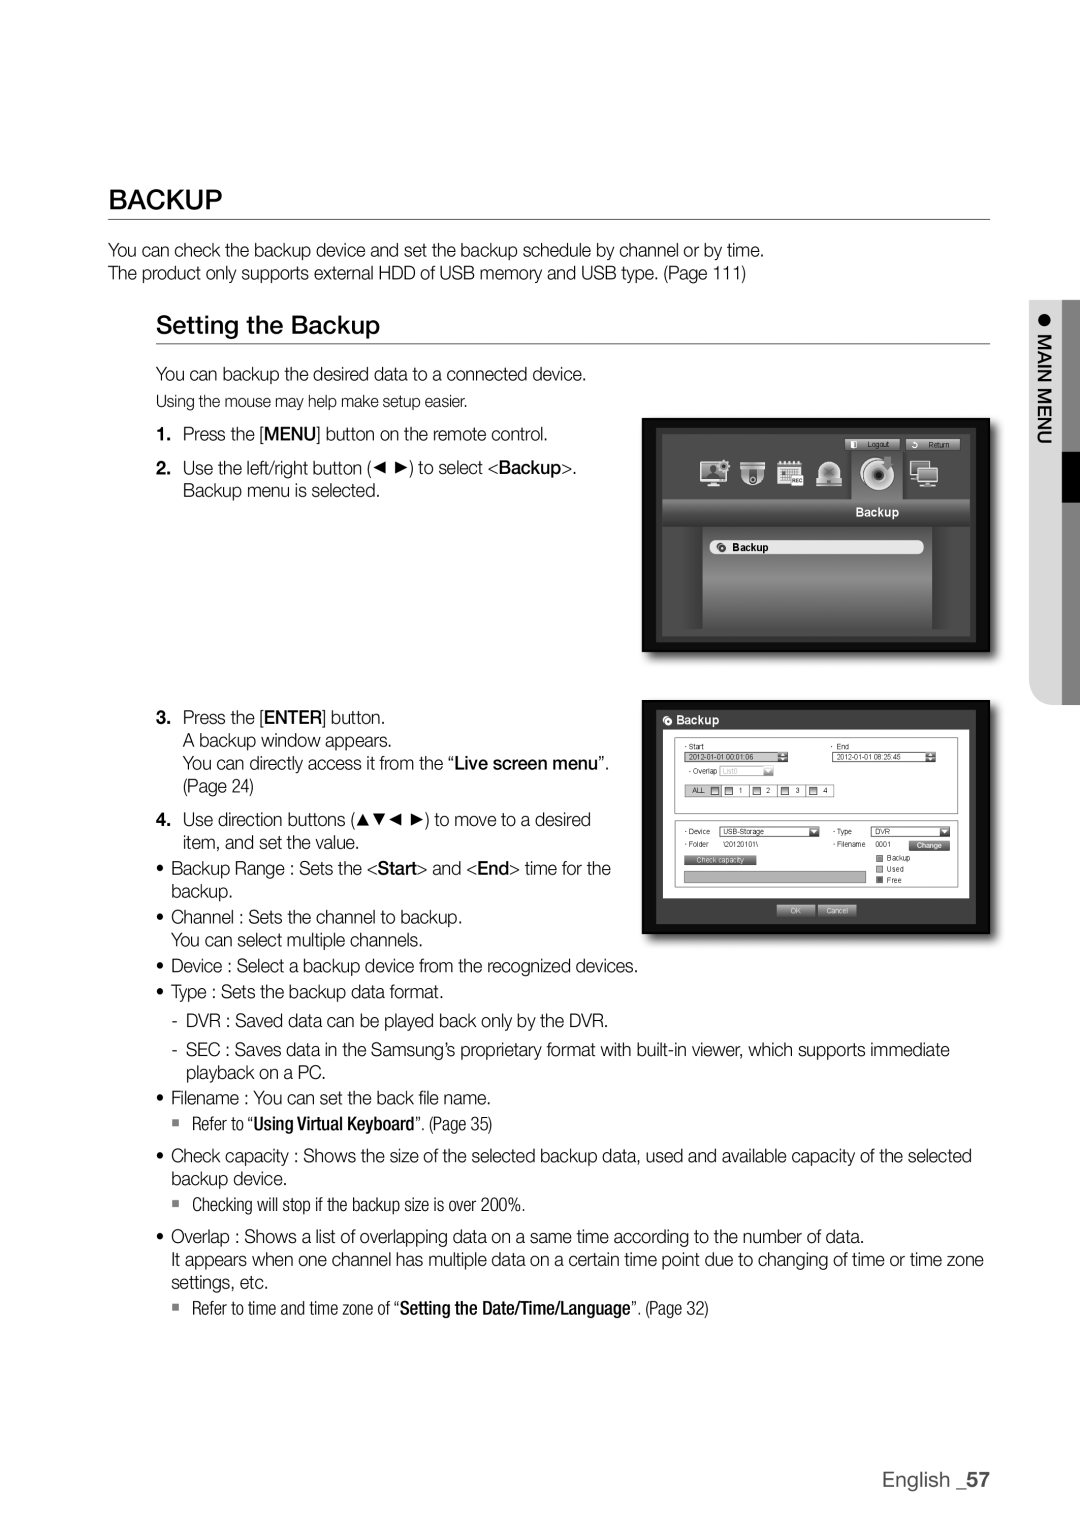 Samsung SDR3100 user manual BaCKuP, Setting the Backup, English _57 